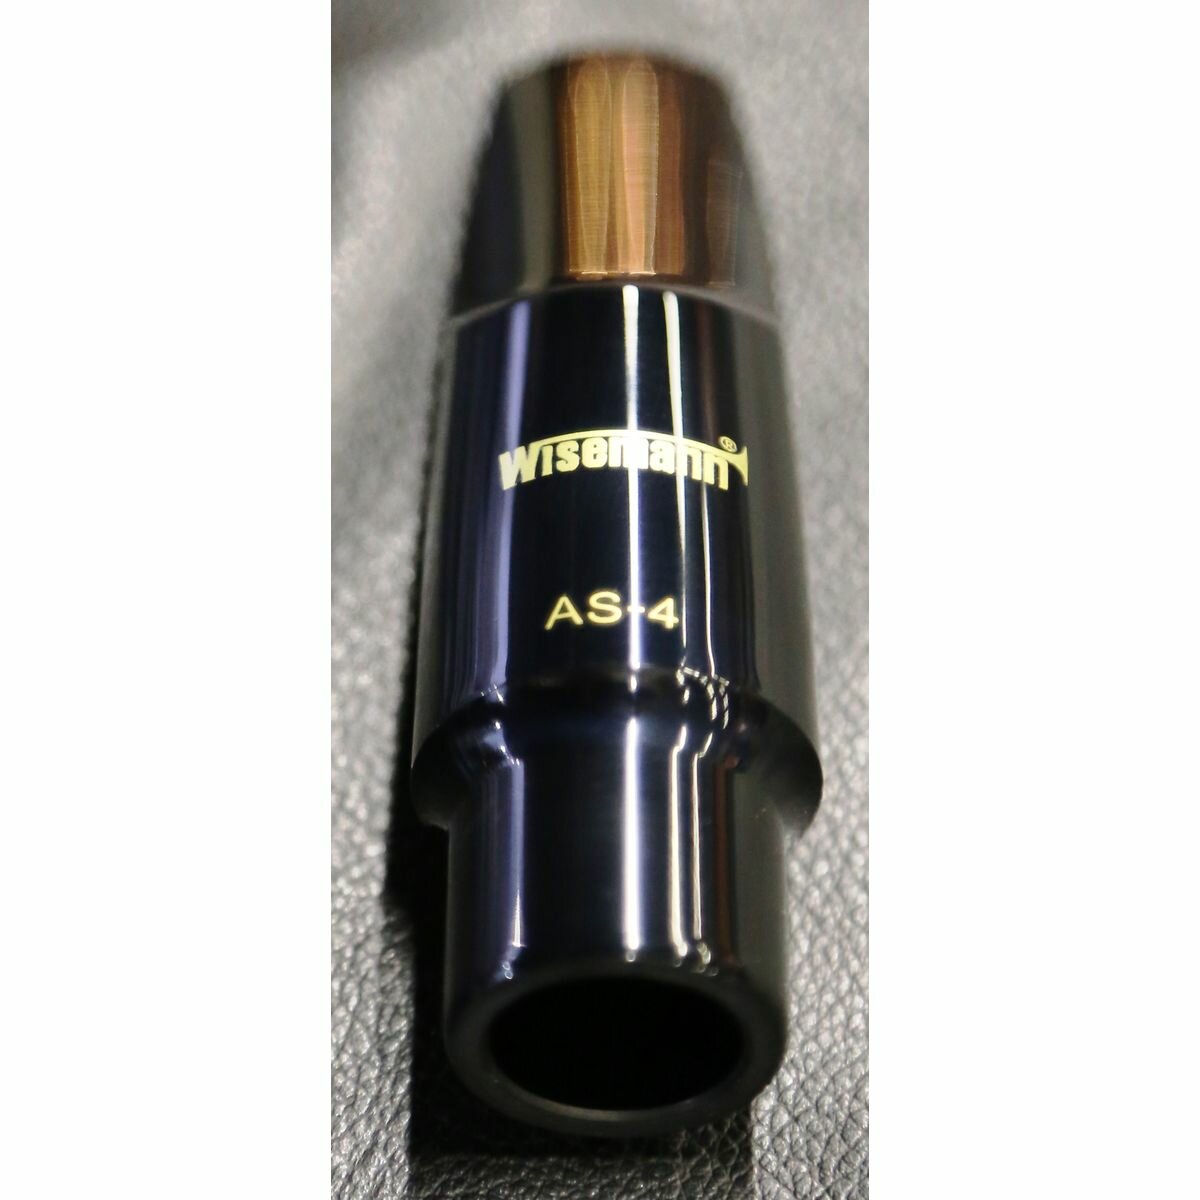 Wisemann Alto Sax Mouthpiece AS-4 мундштук для альт-саксофона стандартный размер пластик ABC